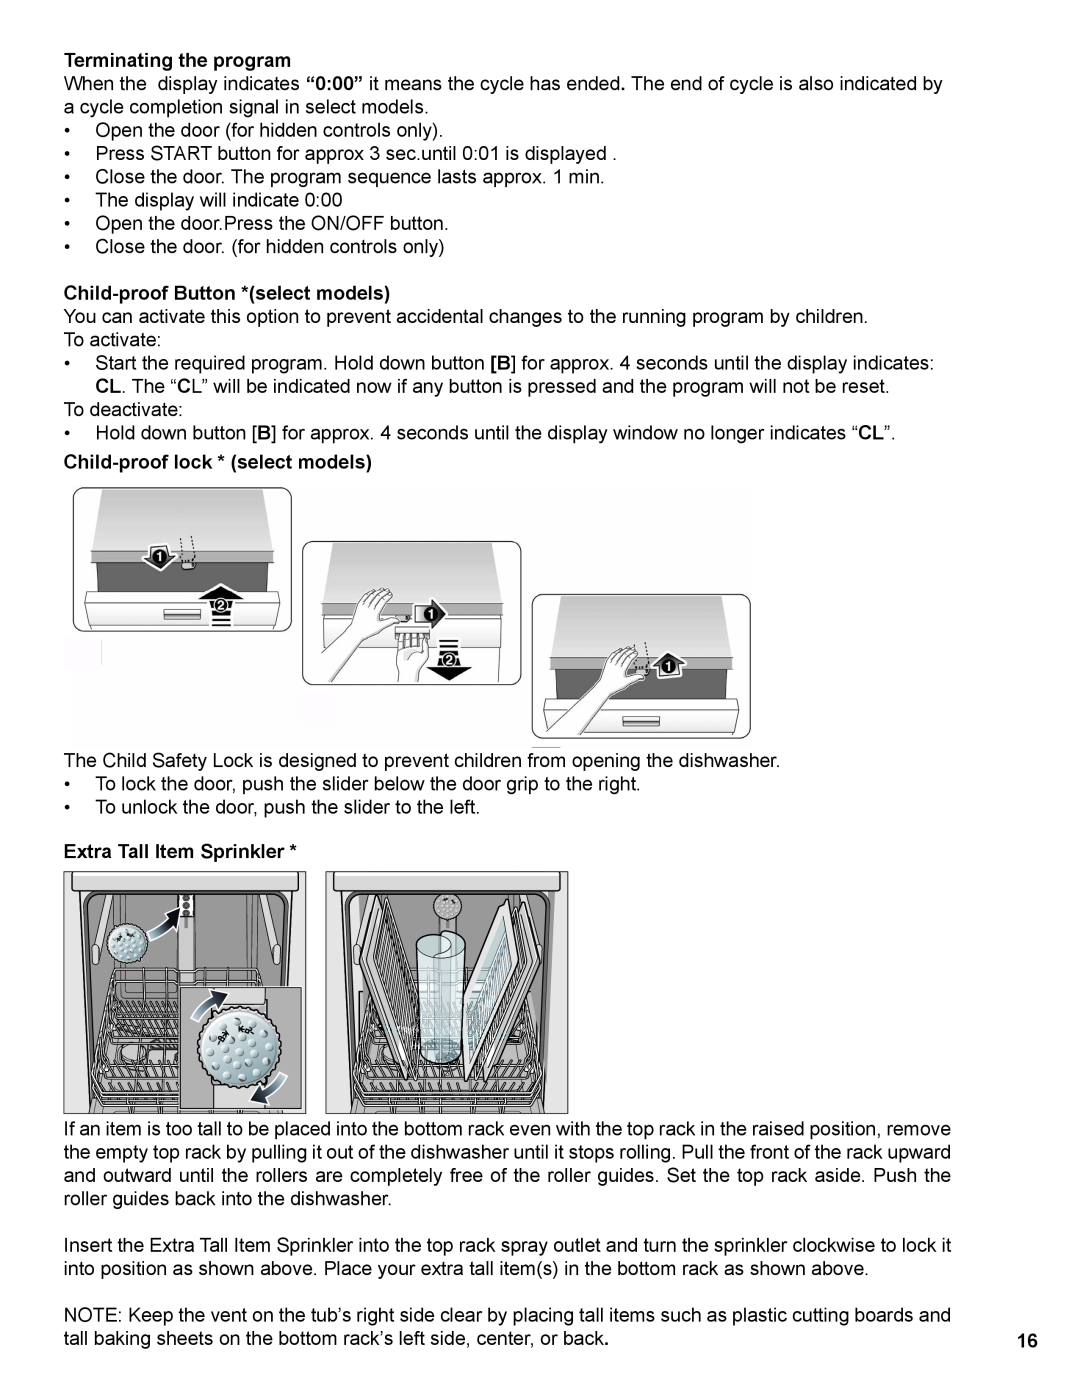 Thermador Dishwasher manual Terminating the program 